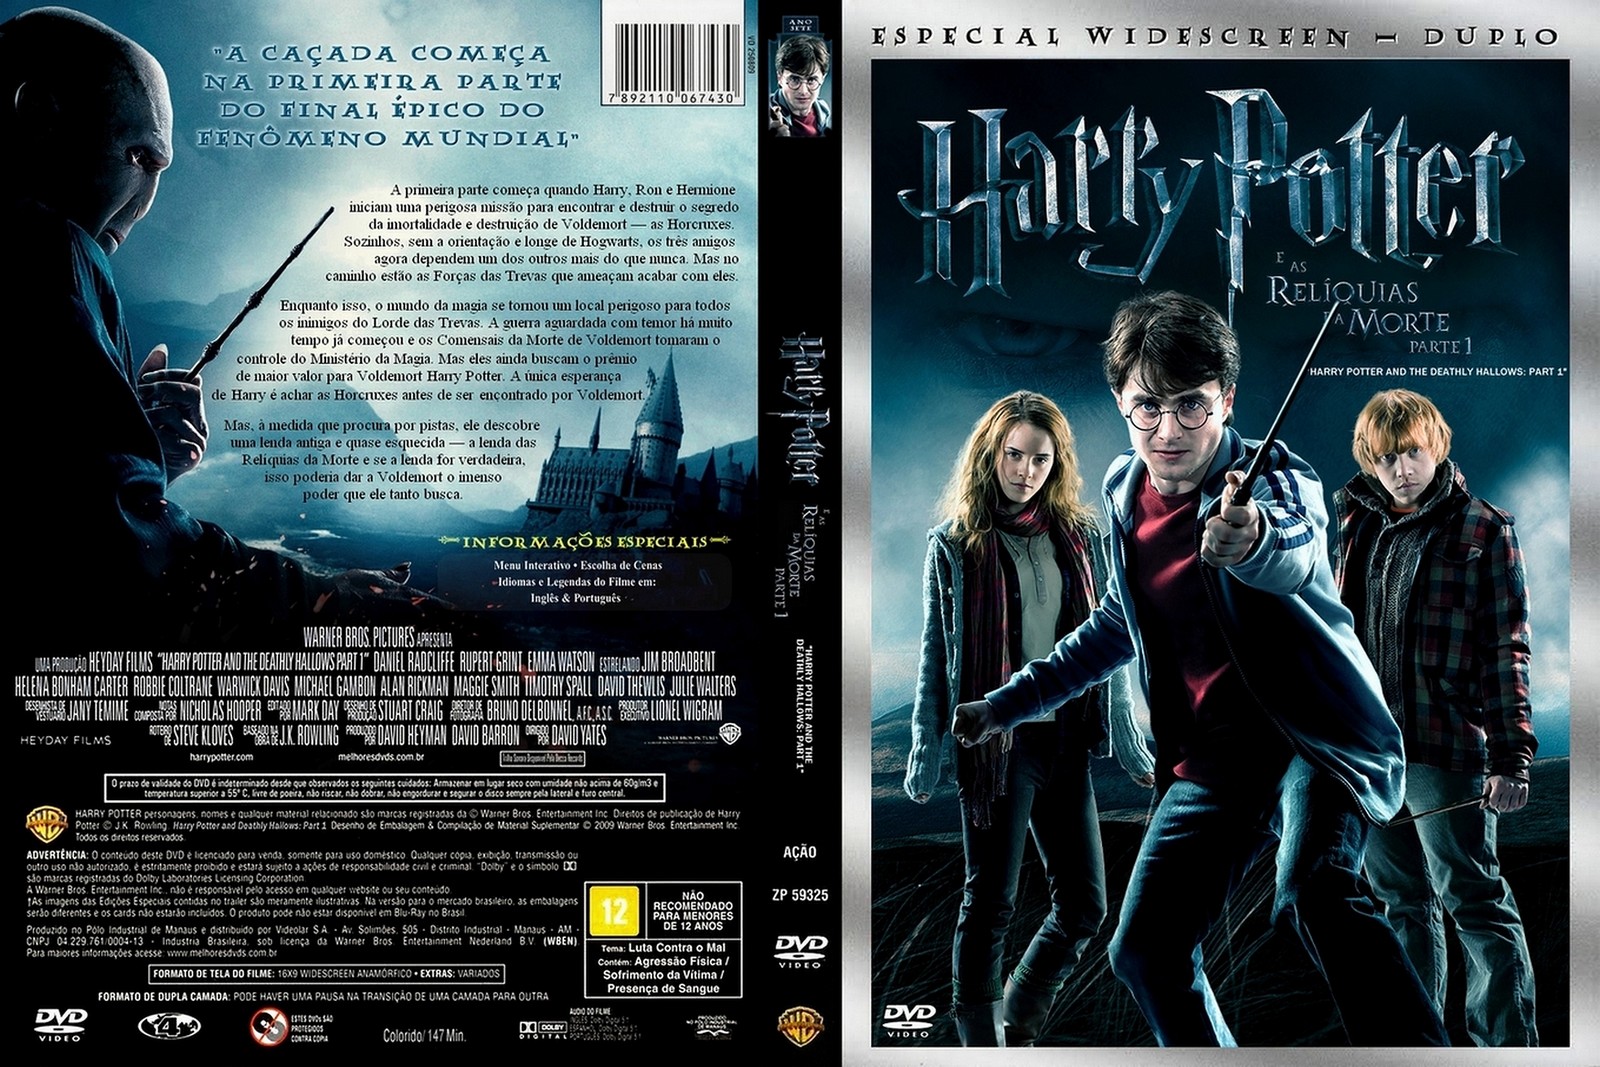 http://4.bp.blogspot.com/-lcp1Xf8VTTg/TZ8wvIo-FYI/AAAAAAAAD_s/RnTDY_-_WT8/s1600/Harry-Potter-E-As-Reliquias-Da-Morte-Parte-1-custom.jpg